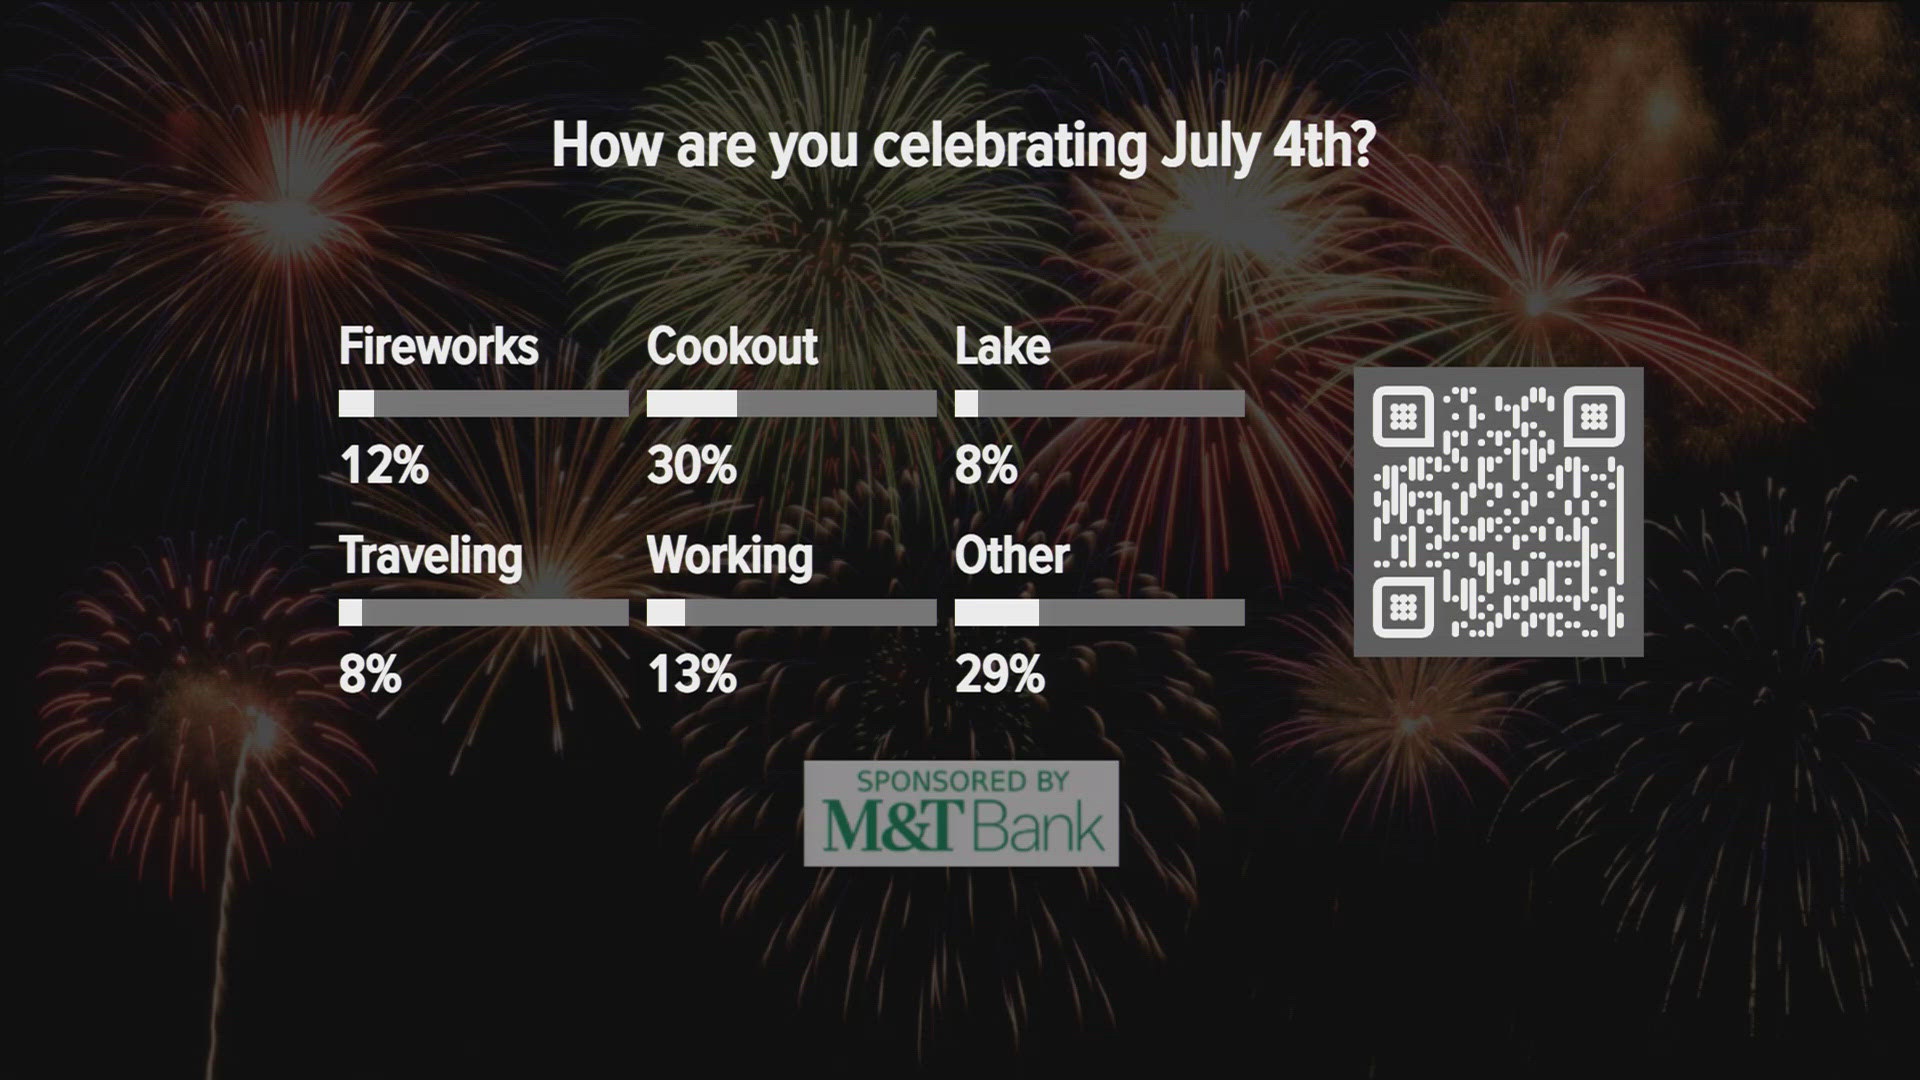 4th of July festivities in WNY kick off